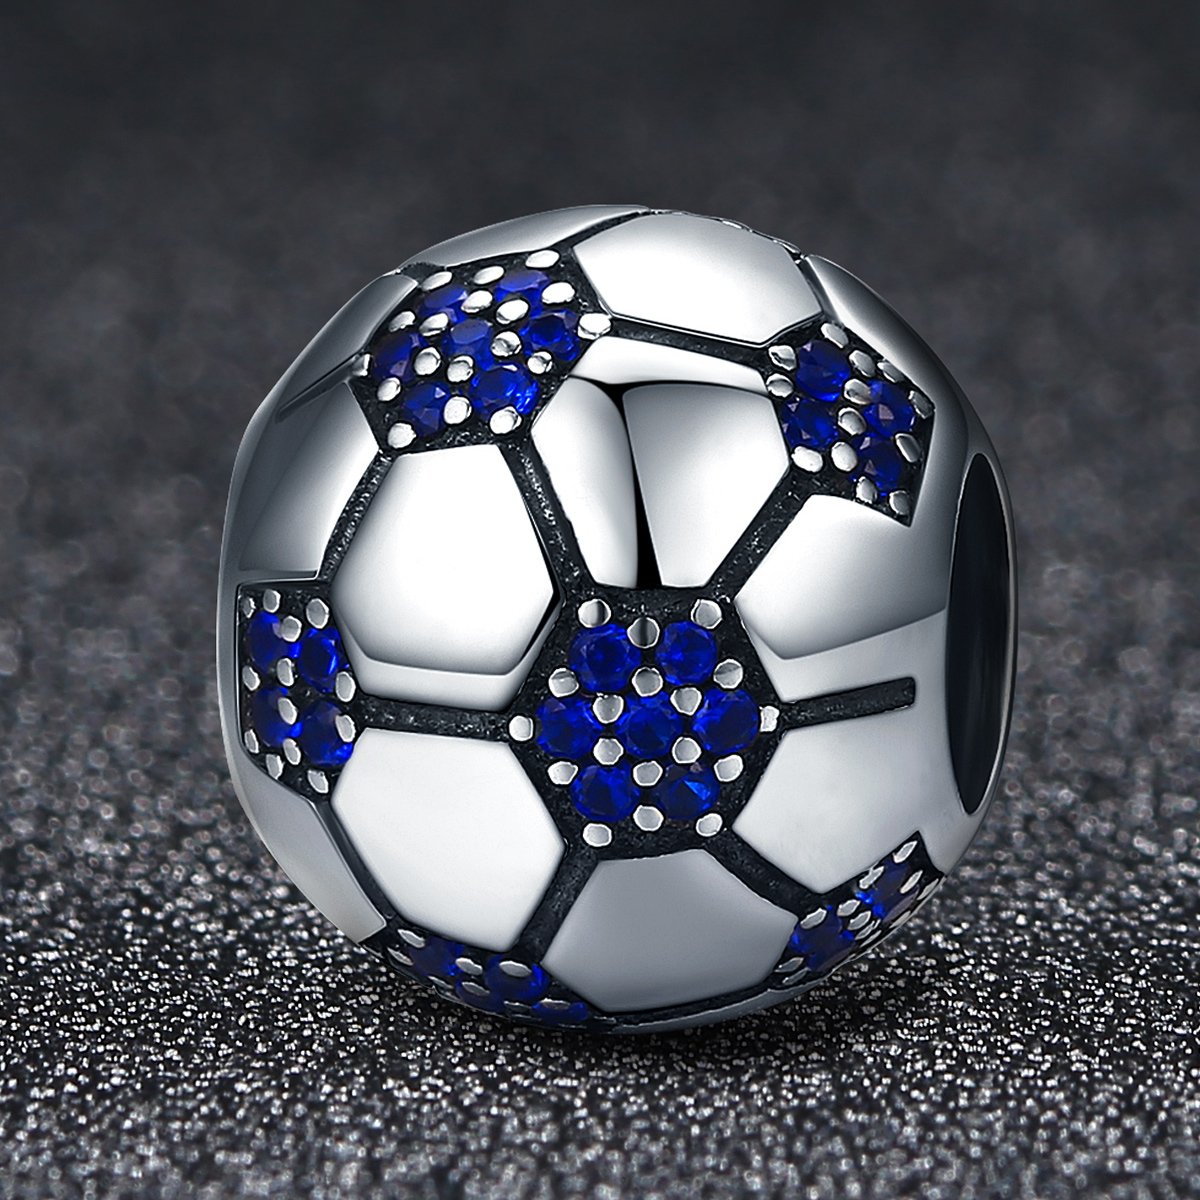 Sterling 925 silver charm the football soccer ball bead pendant fits Pandora charm and European charm bracelet Xaxe.com